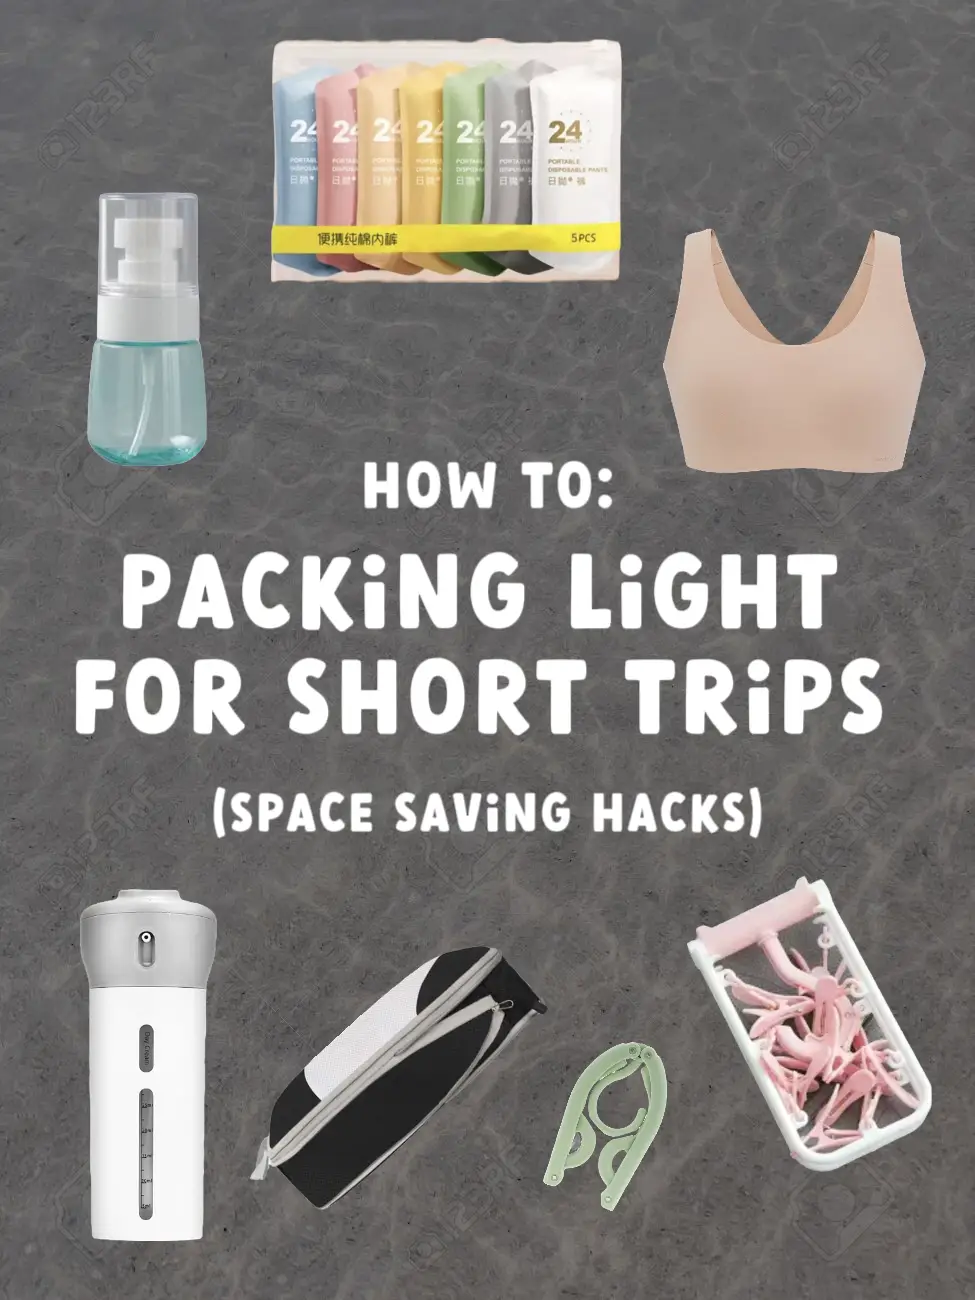 pack smart for budget travel - Lemon8 Search